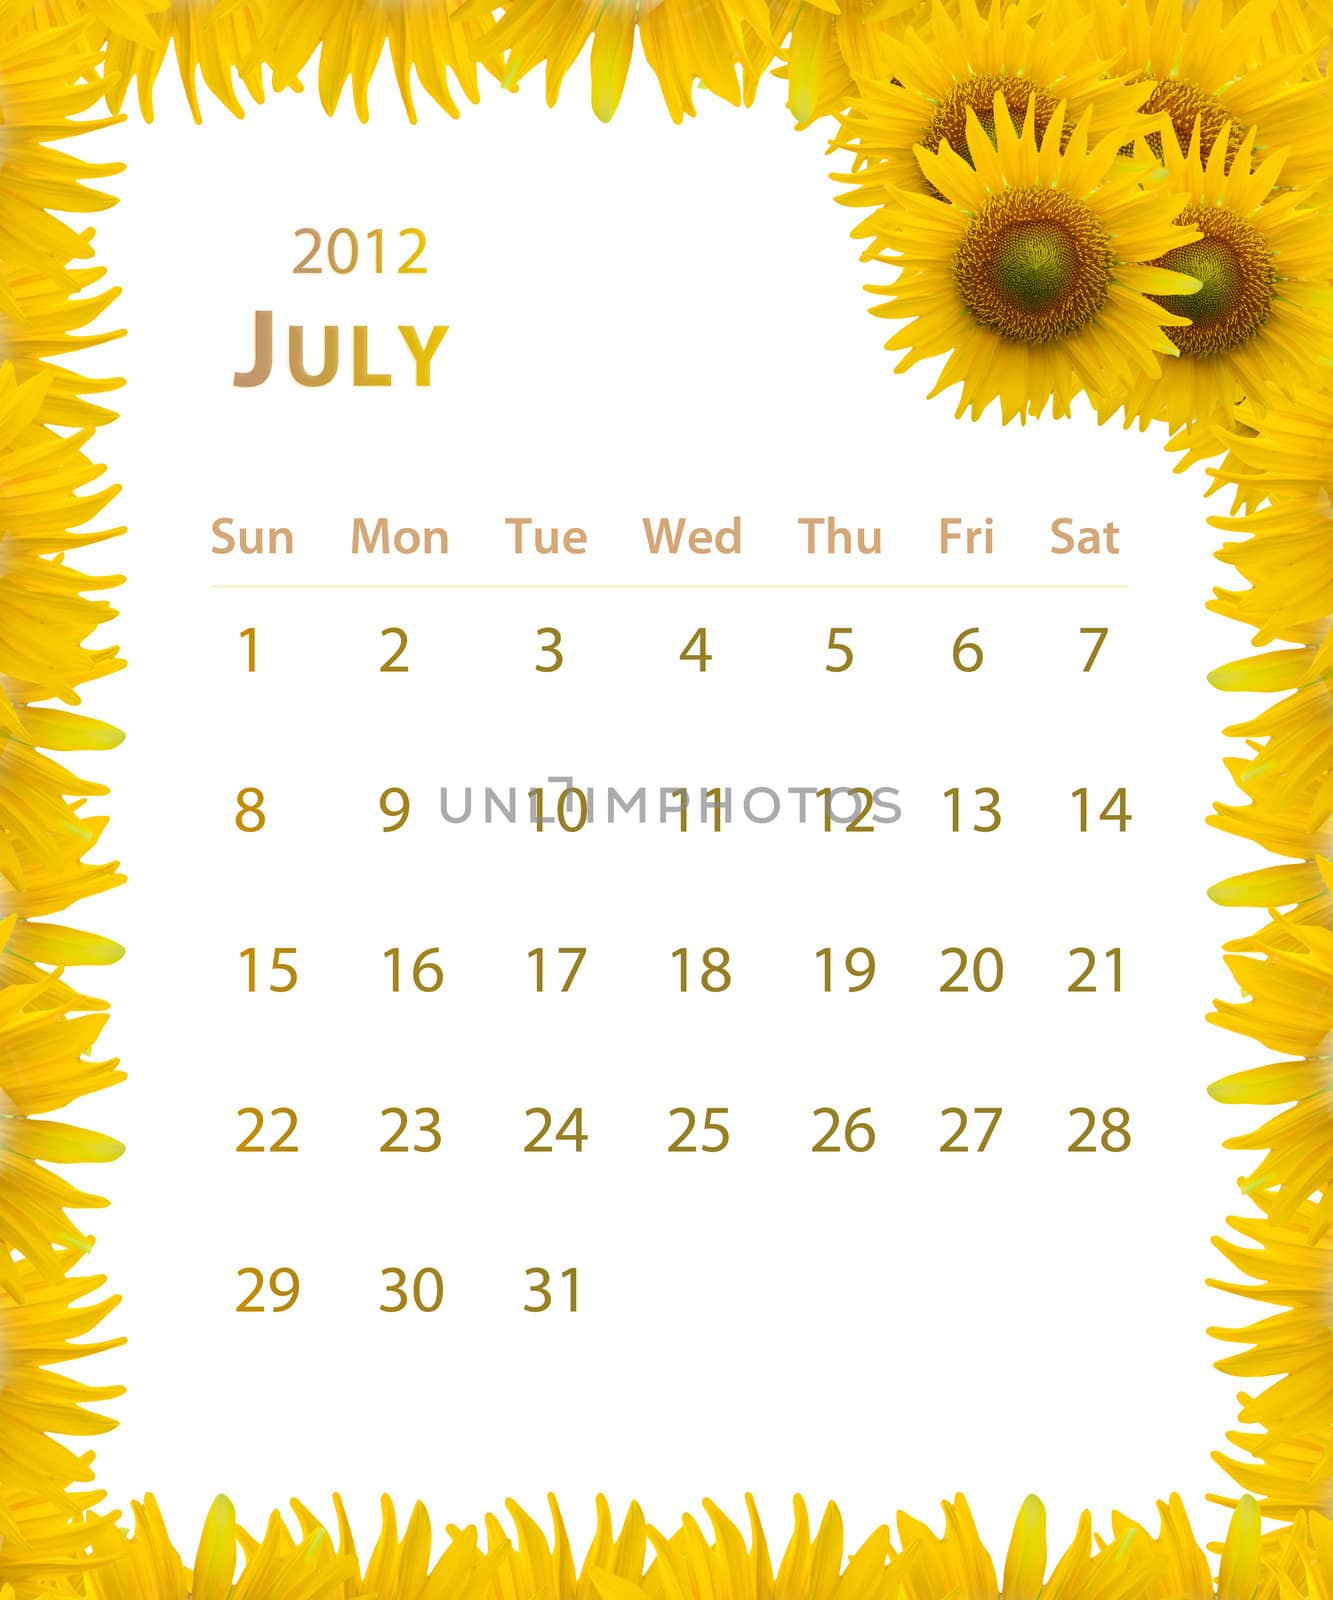 2012 year calendar ,July with Sunflower frame design